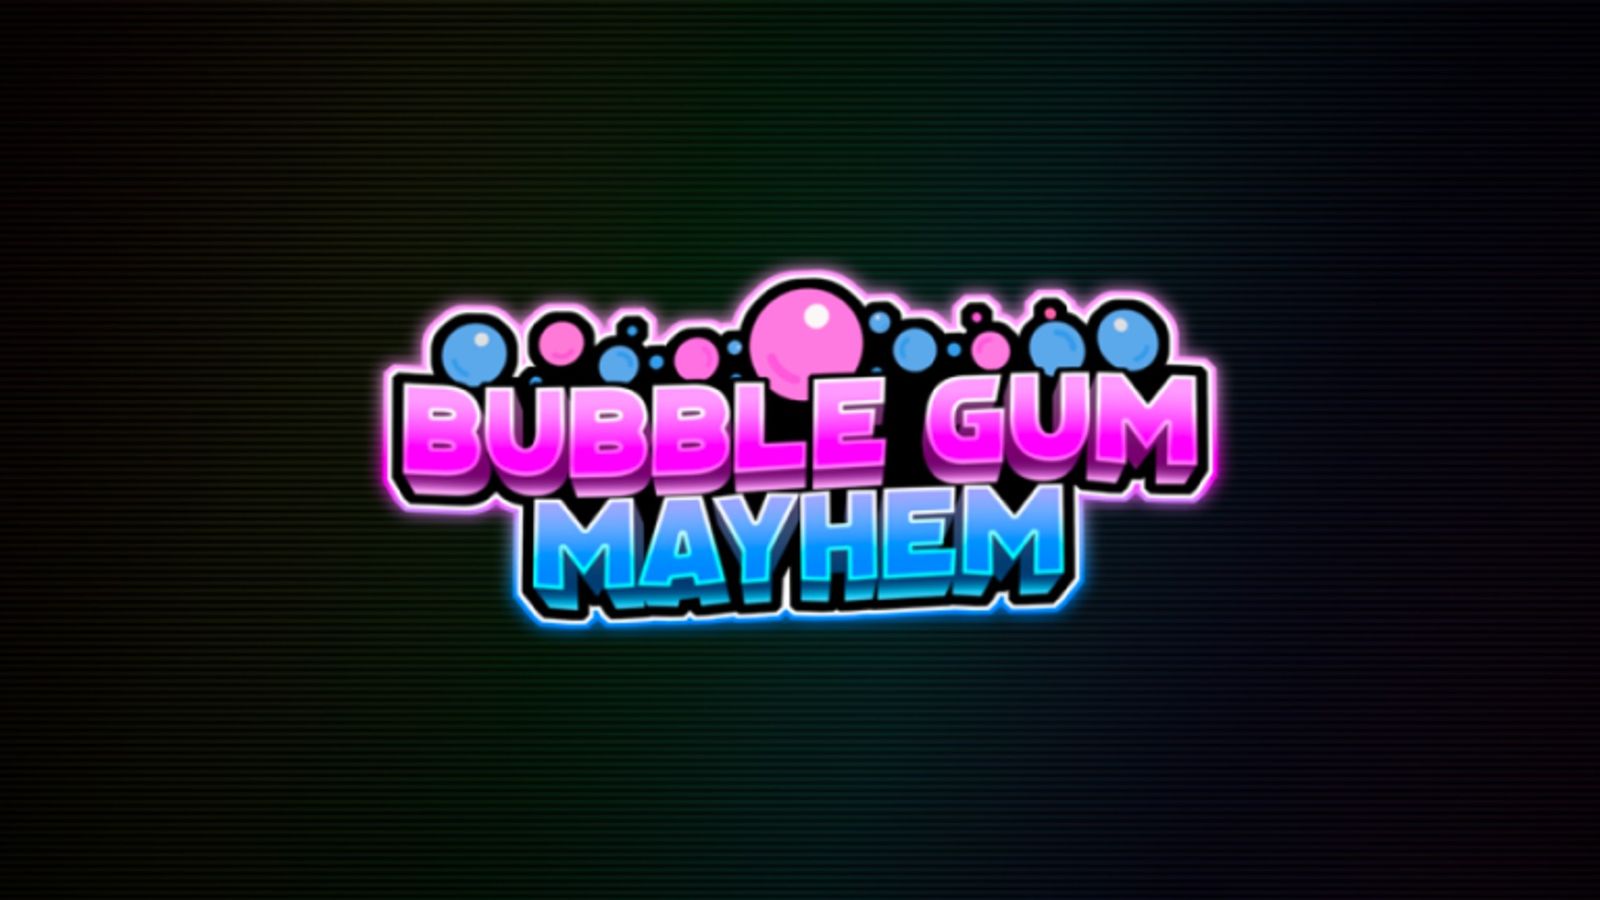 The logo of Bubble Gum Mayhem.